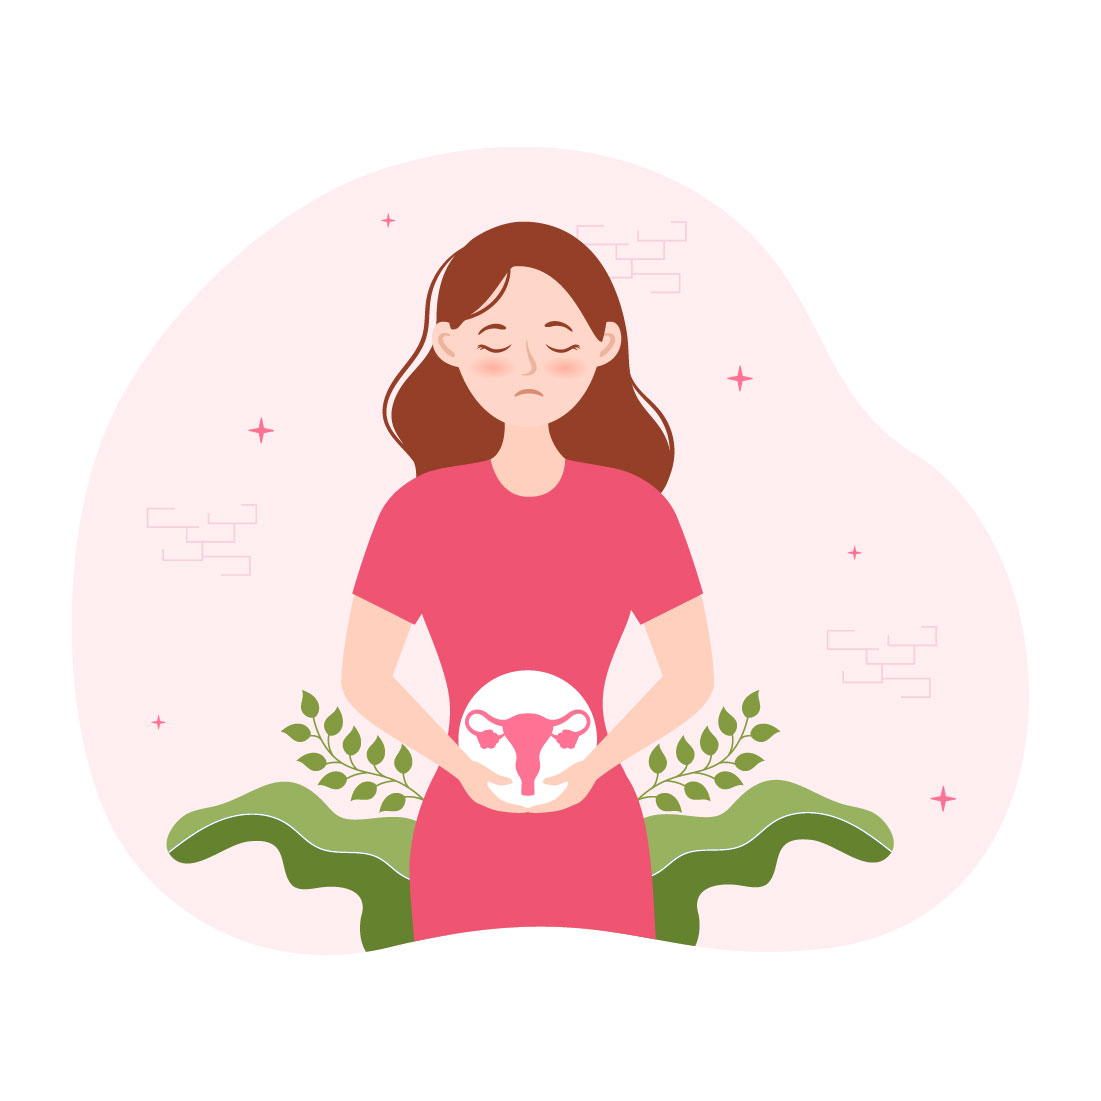 Endometriosis Graphics Design cover image.